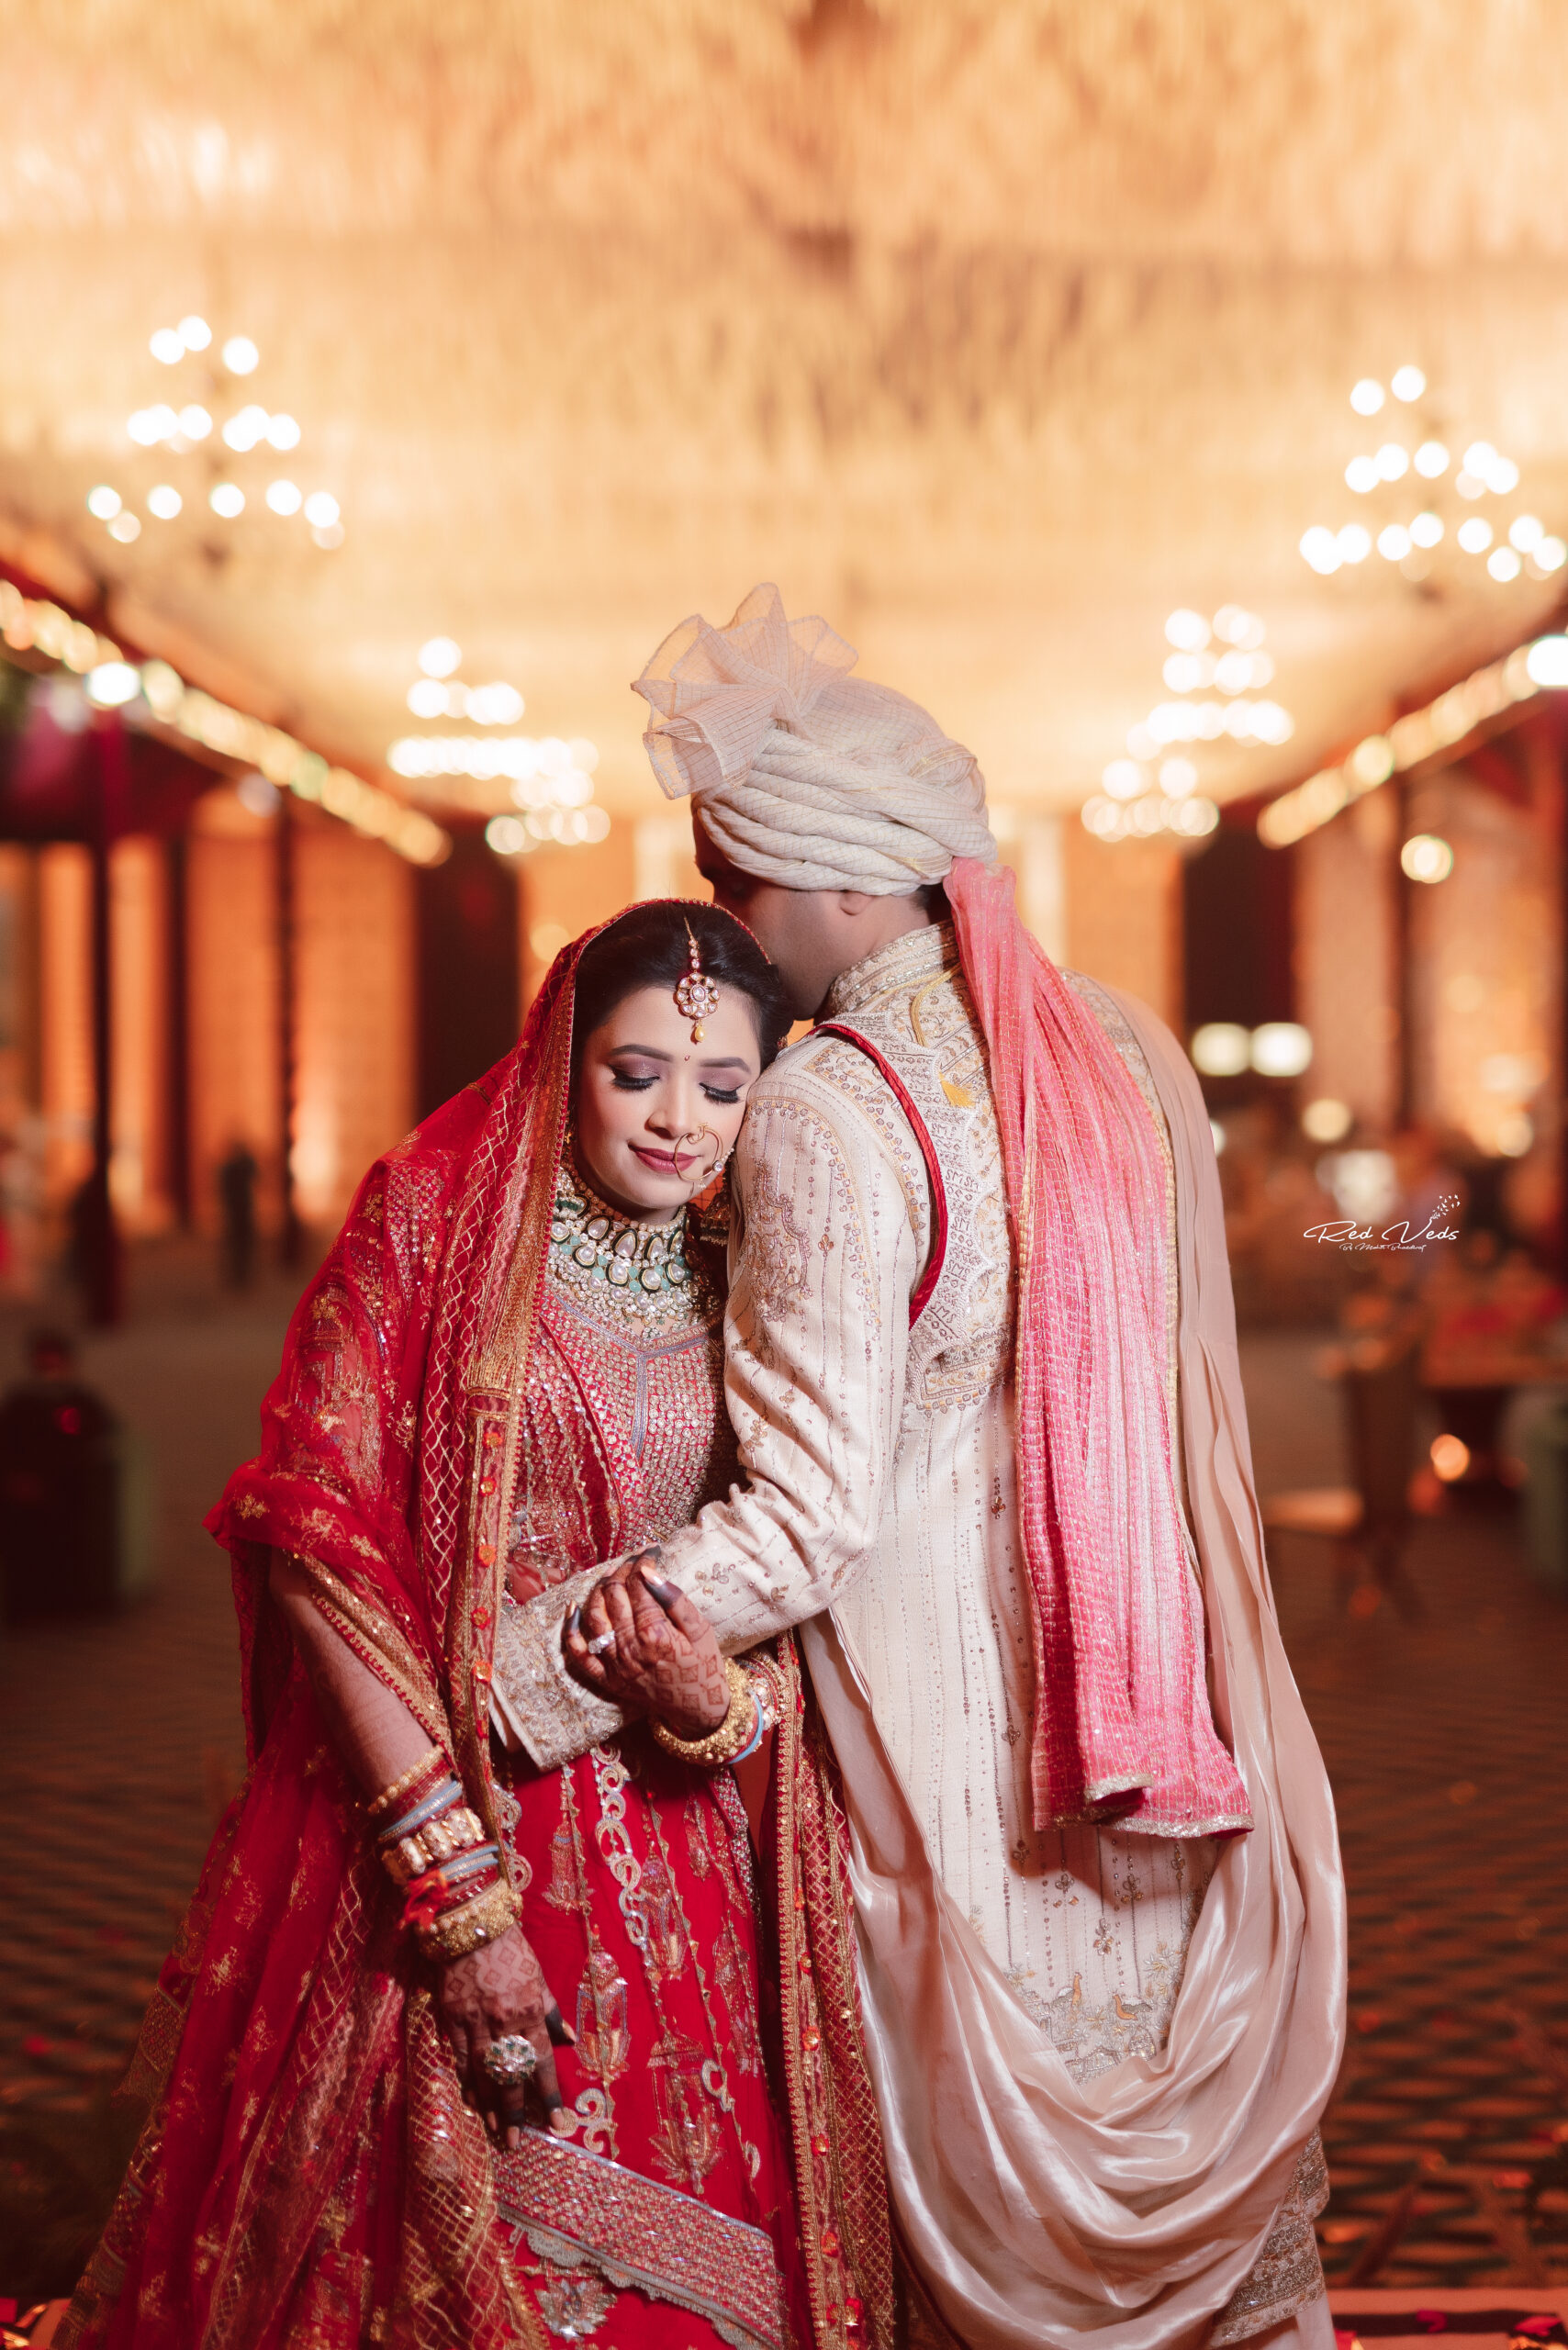 Abhira | Indian wedding photography poses, Bride groom photoshoot, Indian  bride poses